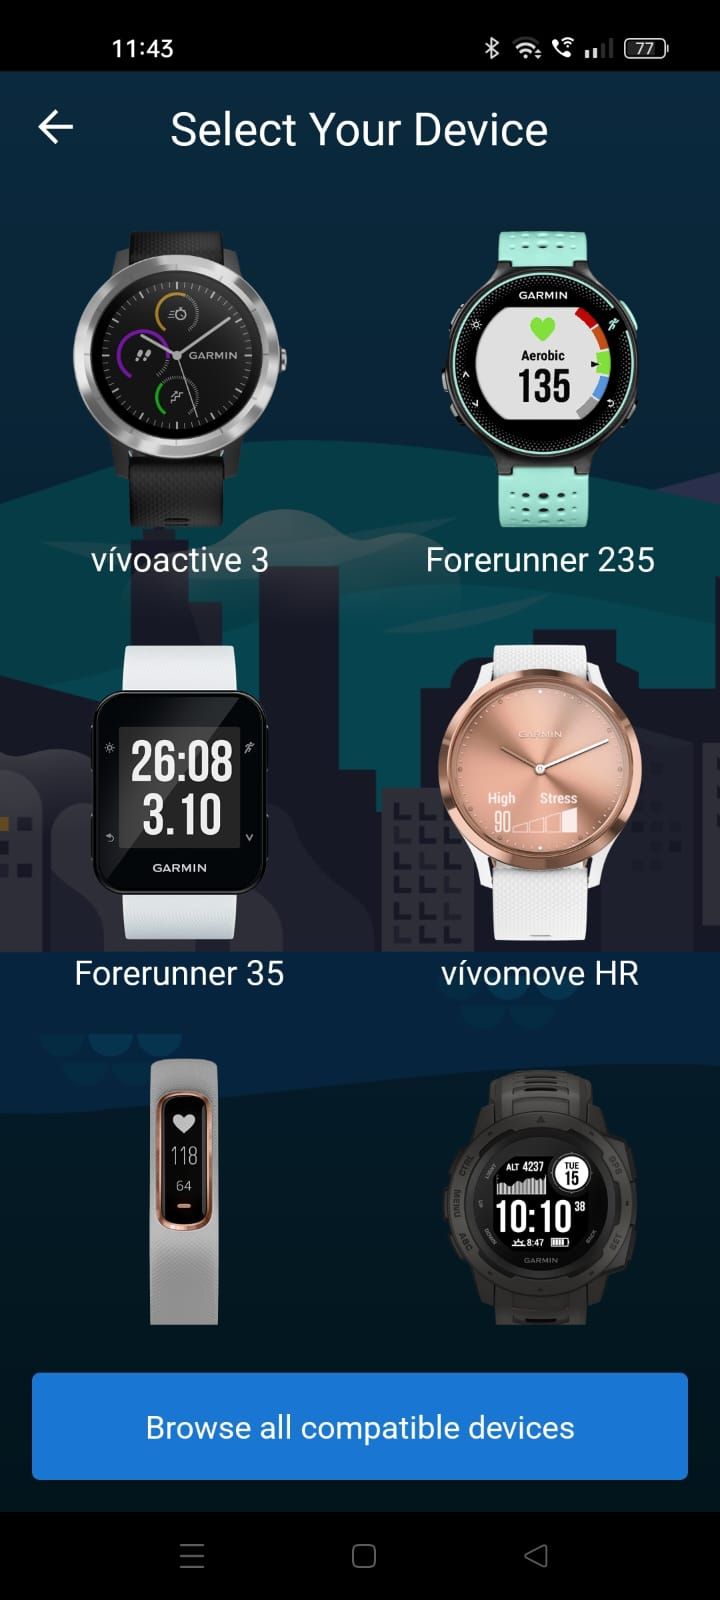 Captura de tela mostrando Procurar todos os dispositivos compatíveis no aplicativo Garmin Connect